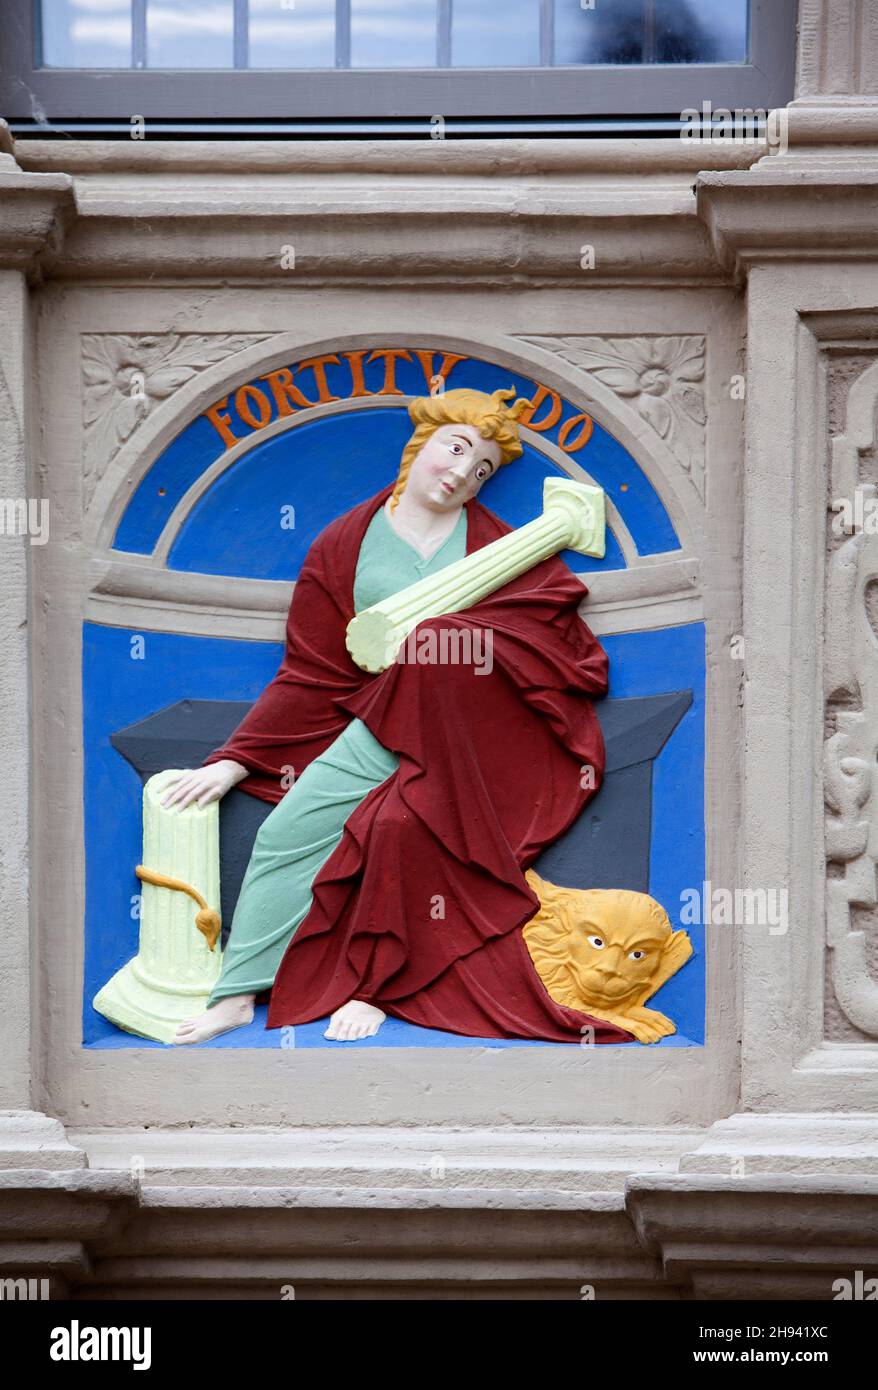 Fortitudo, Lain for bravery, decoration of the facade, Hexenbürgermeisterhaus, Lemgo, North Rhine-Westphalia, Germany, Europe Stock Photo